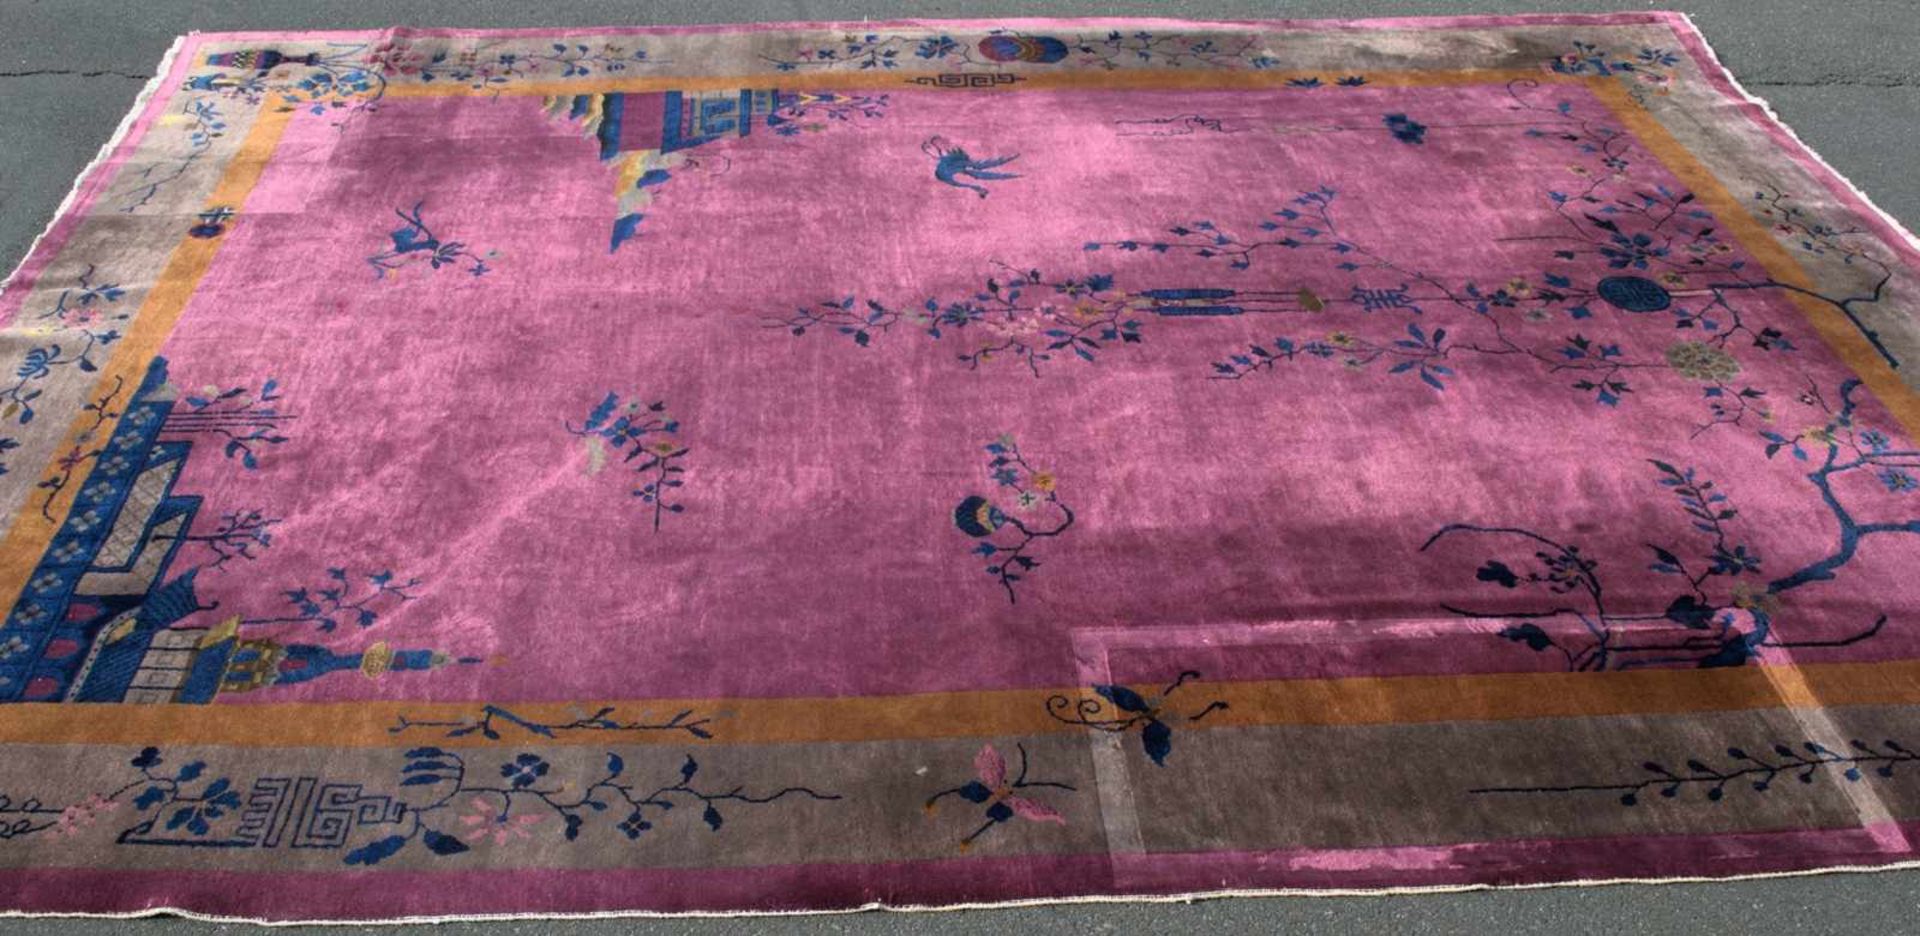 Älterer China-Teppich, ca. 270 x 345 cm, wohl 1. Hälfte 20. Jhd., lilafarbender Teppich mit